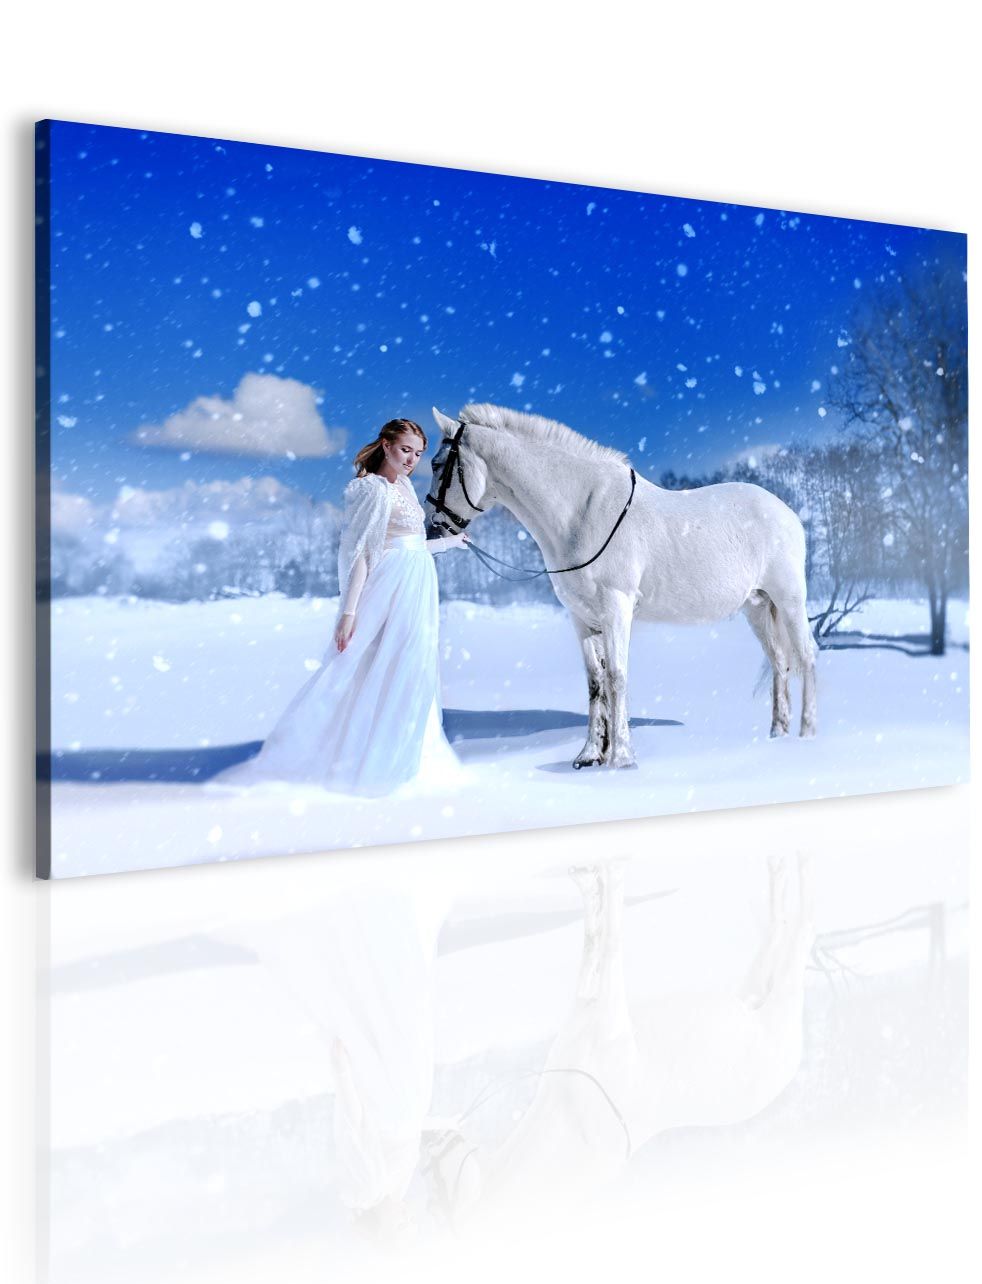 Obraz dívka a kůň Velikost (šířka x výška): 120x80 cm - S-obrazy.cz